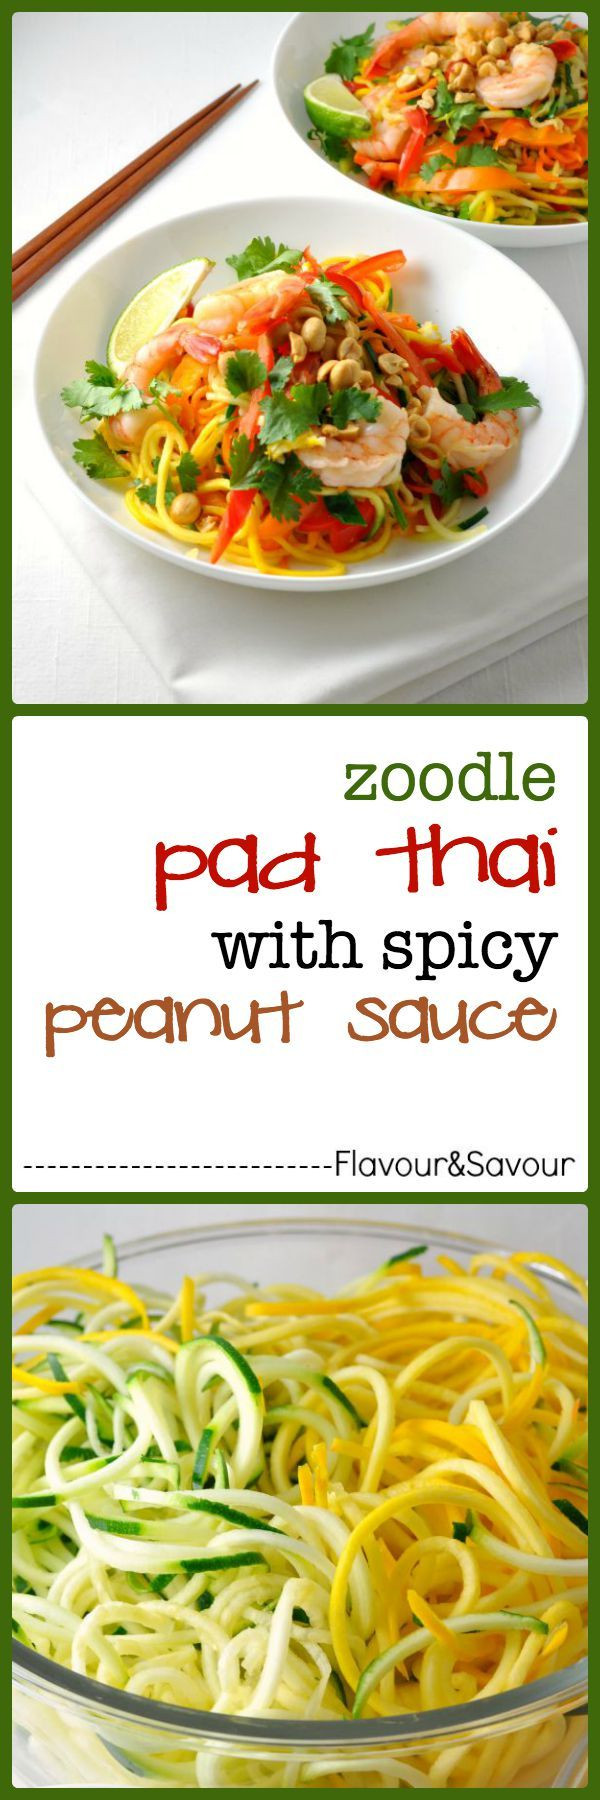 Traditional Pad Thai Peanut Sauce Recipe
 Zoodle Pad Thai with Shrimp Recipe